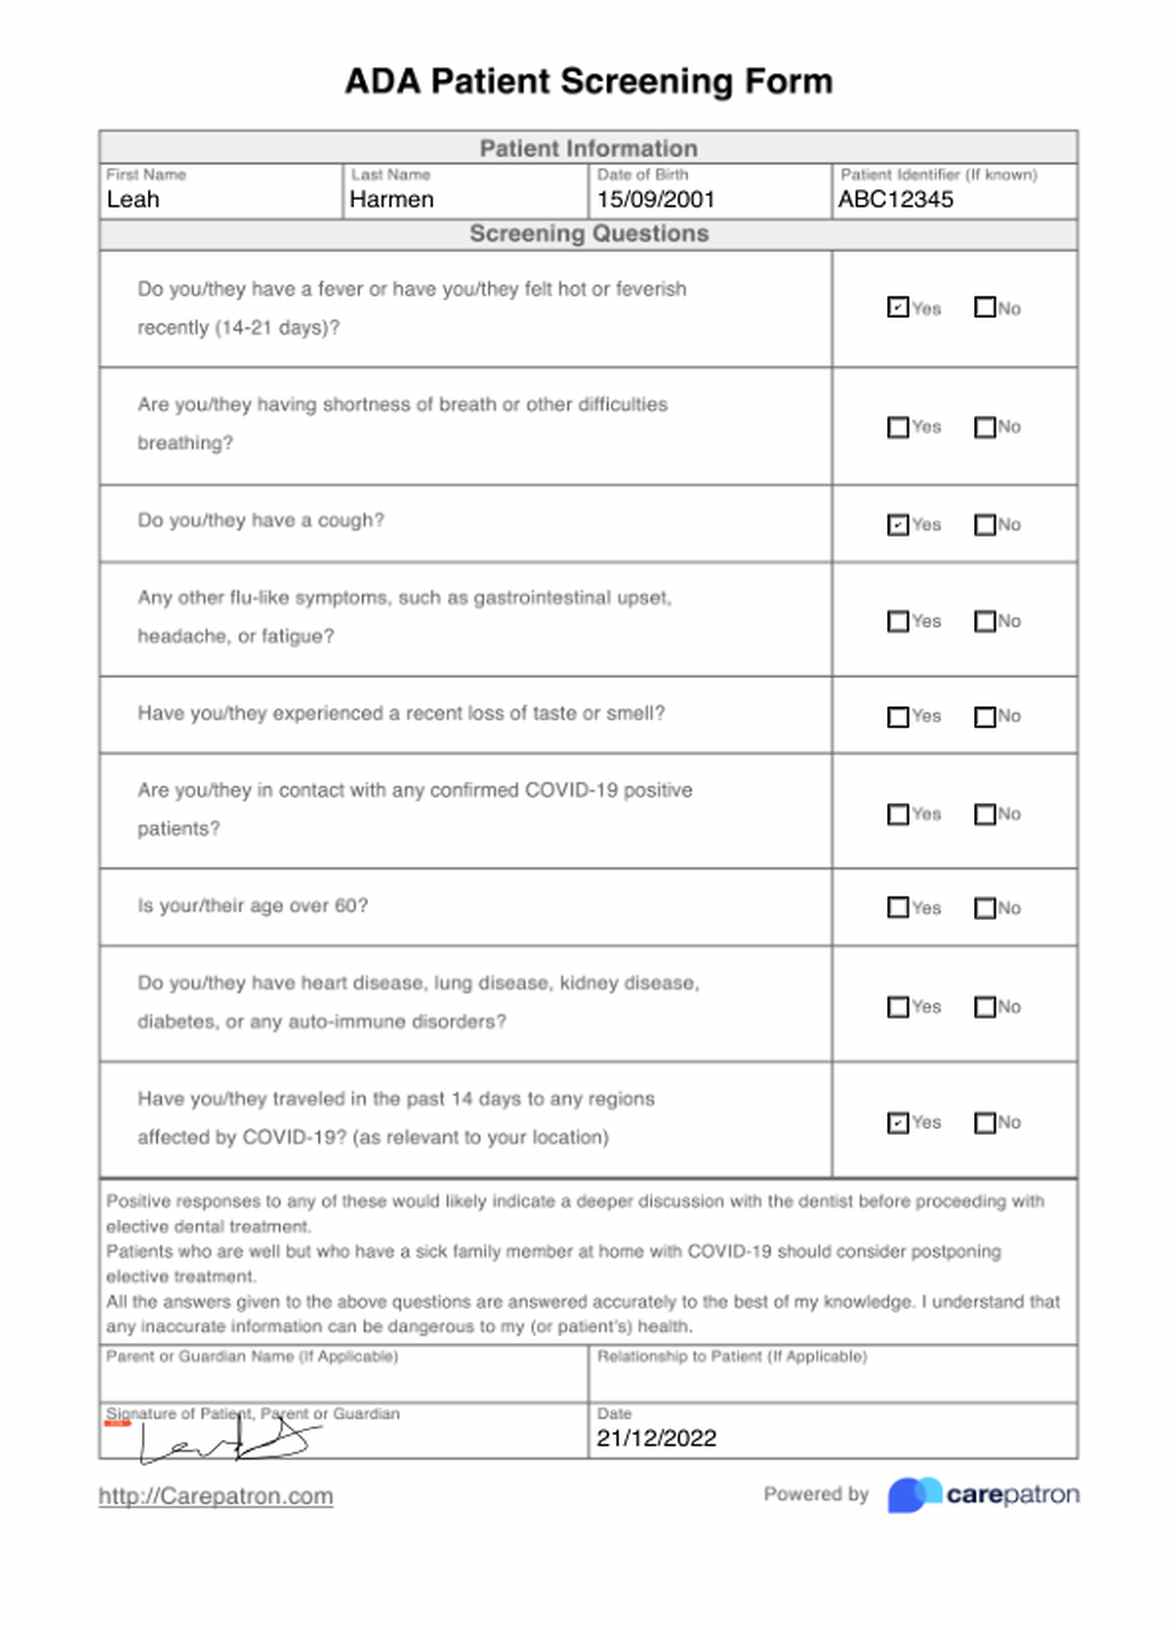 ADA Patient Screening Form PDF Example